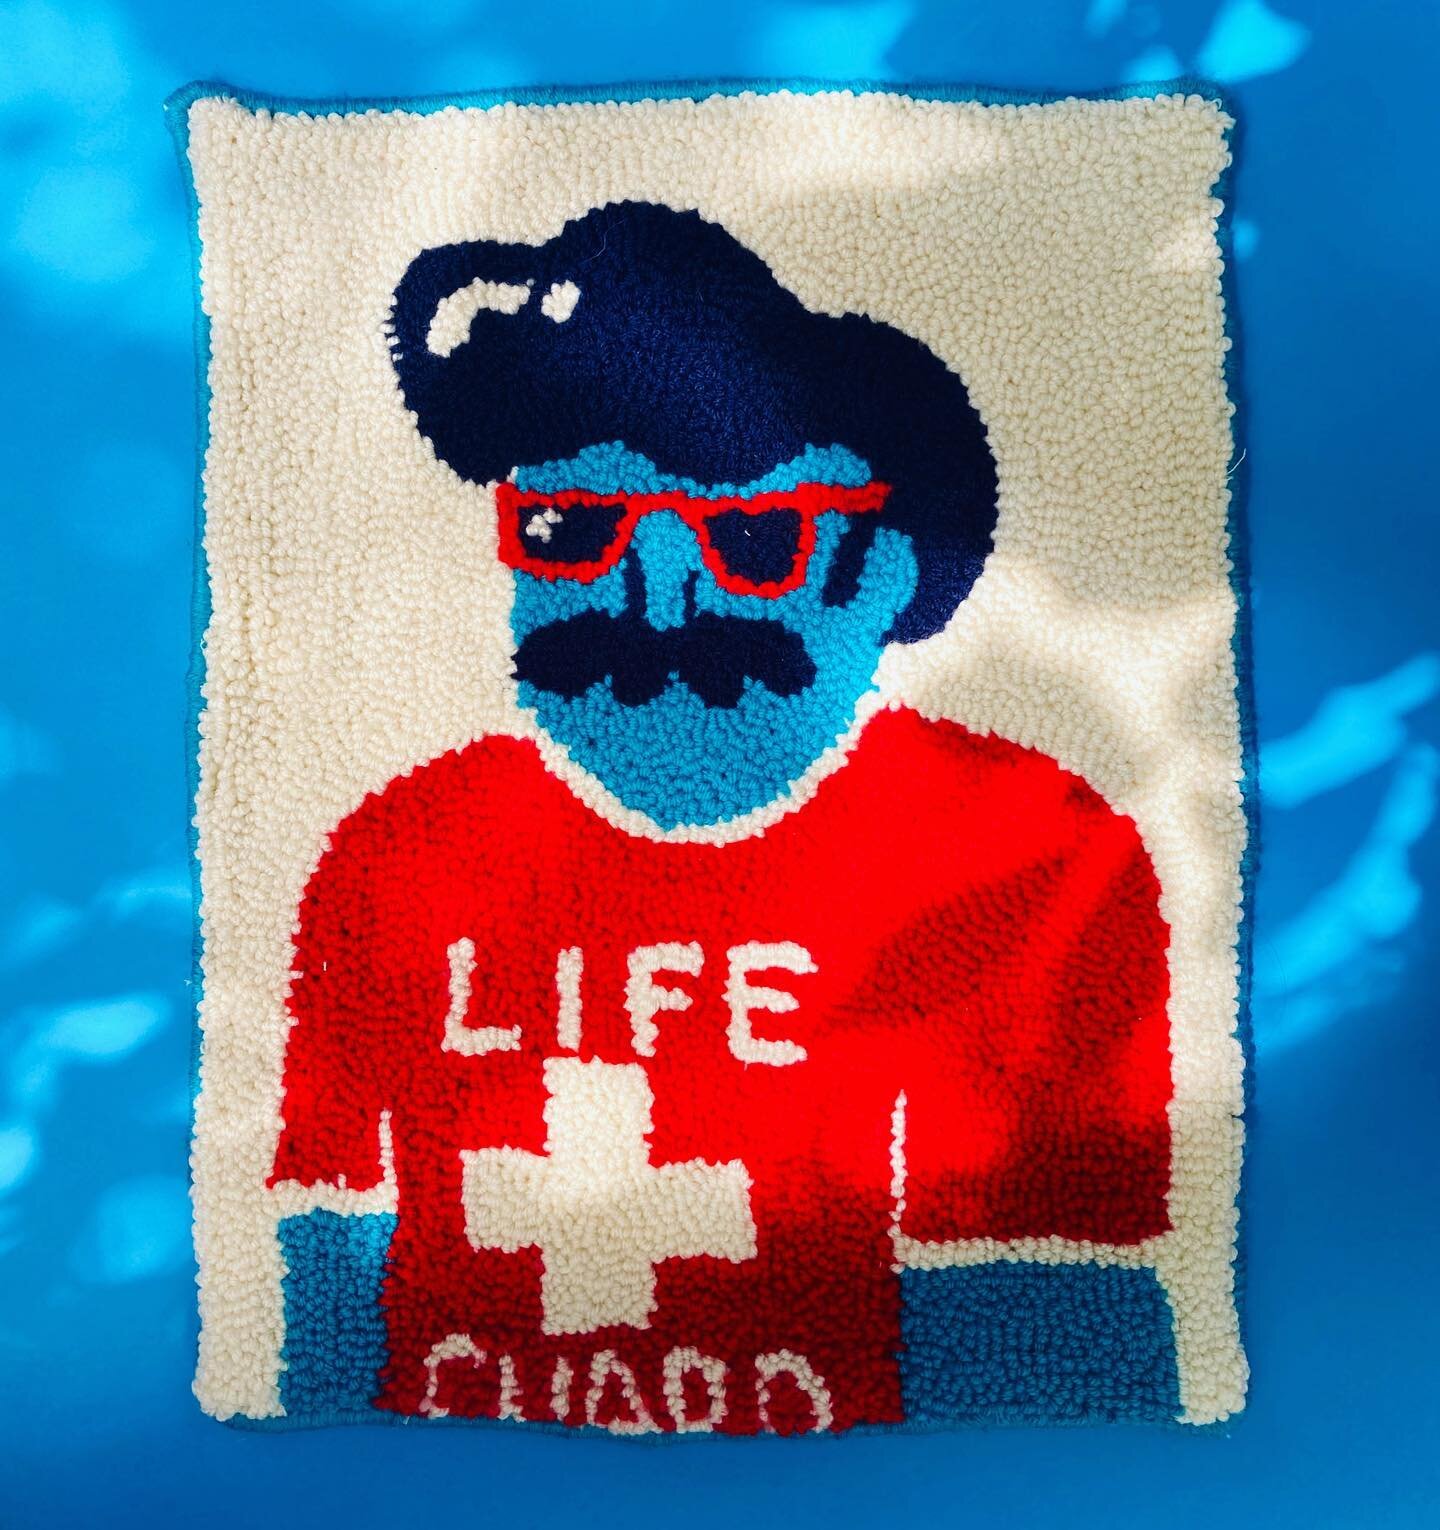 🚨Hunky Lifeguard Alert🚨
.
.
.
.
#tufting #punchneedle #handtufted #illustration #textiledesign #rugtufting